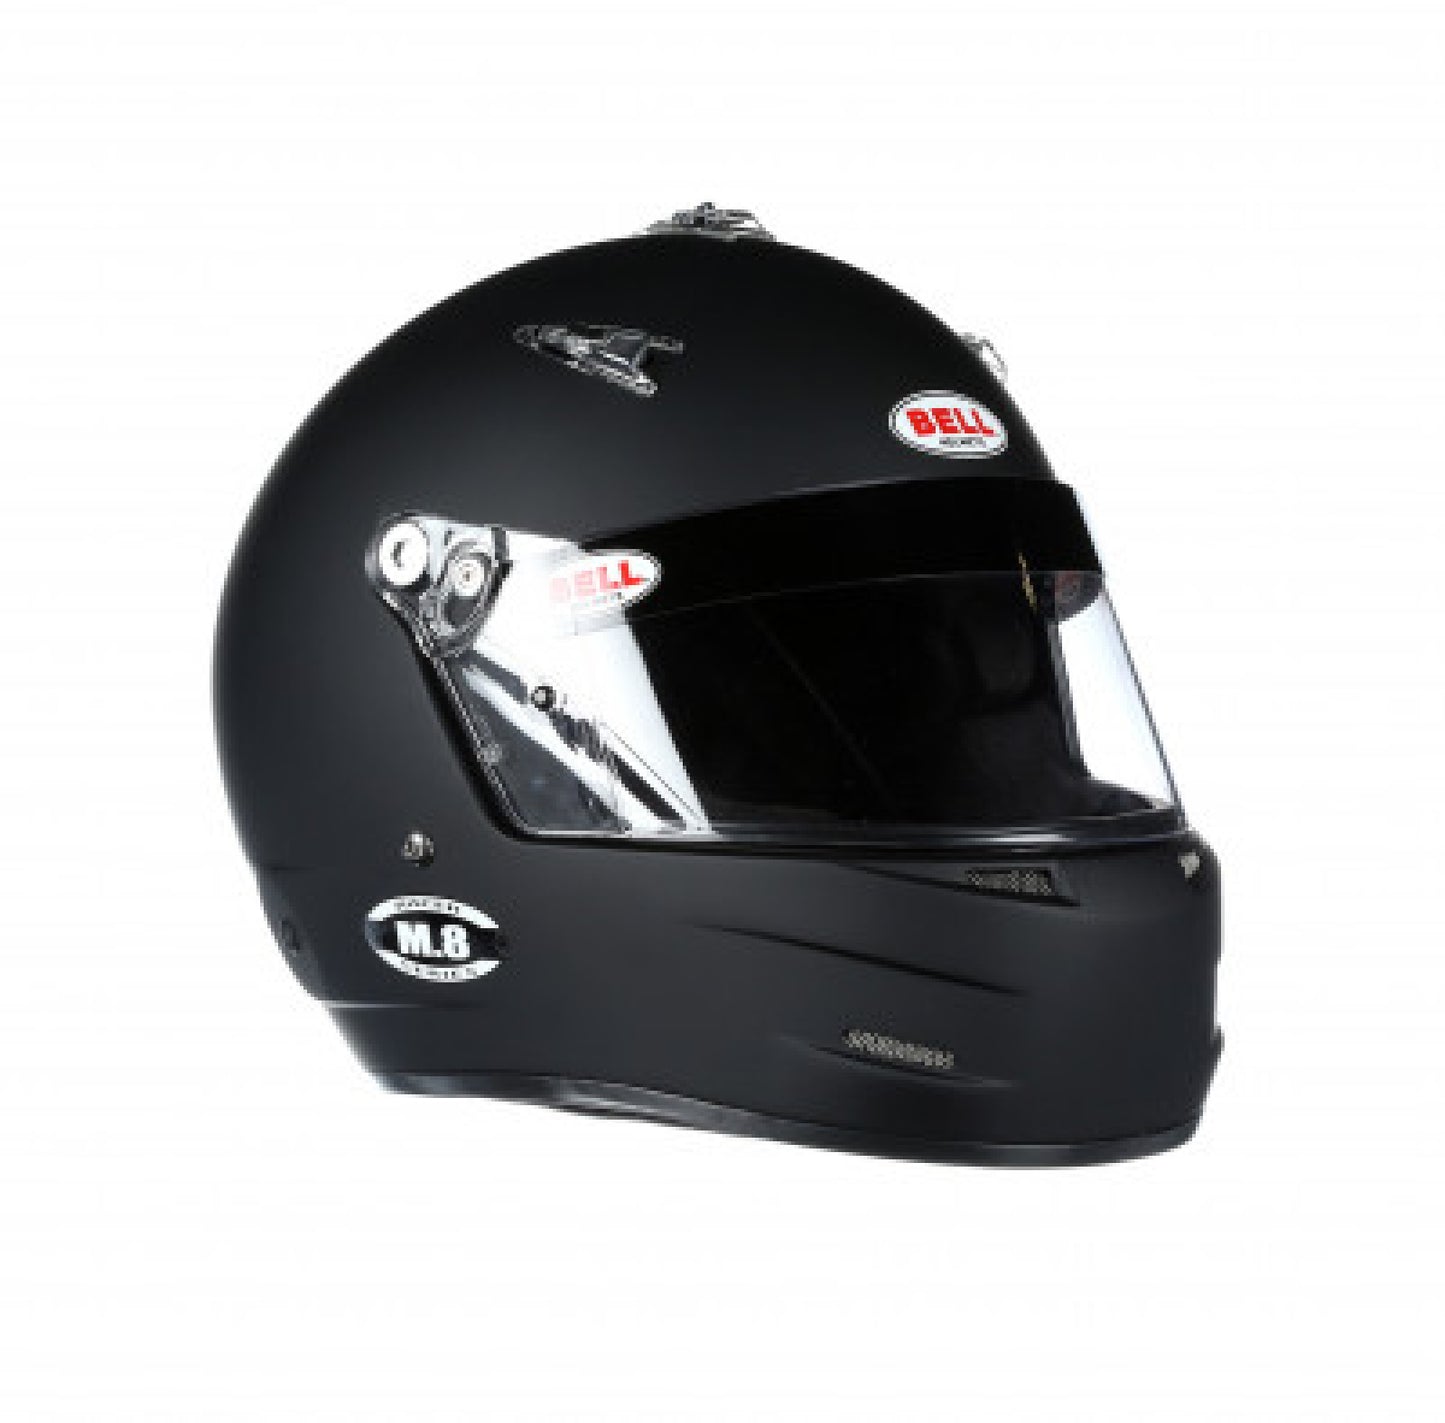 Bell M8 Racing Helmet-Matte Black Size Extra Large